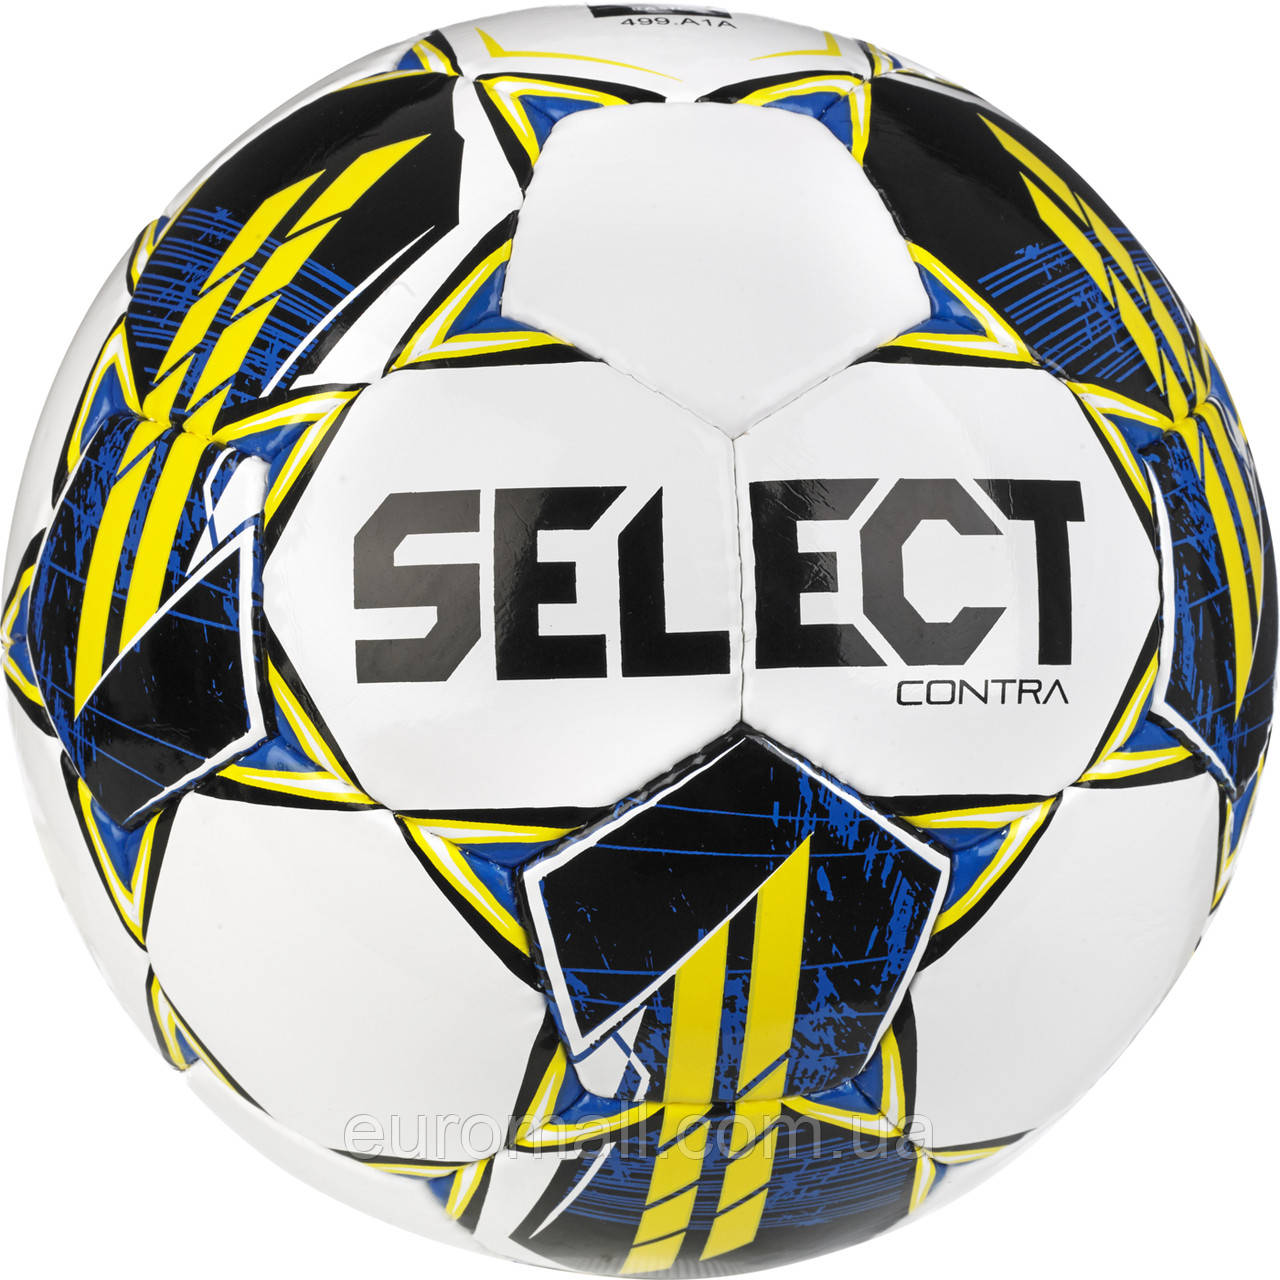 М'яч футбольний Select Contra FIFA Basic v23 085316-196 Розмір EU: 5